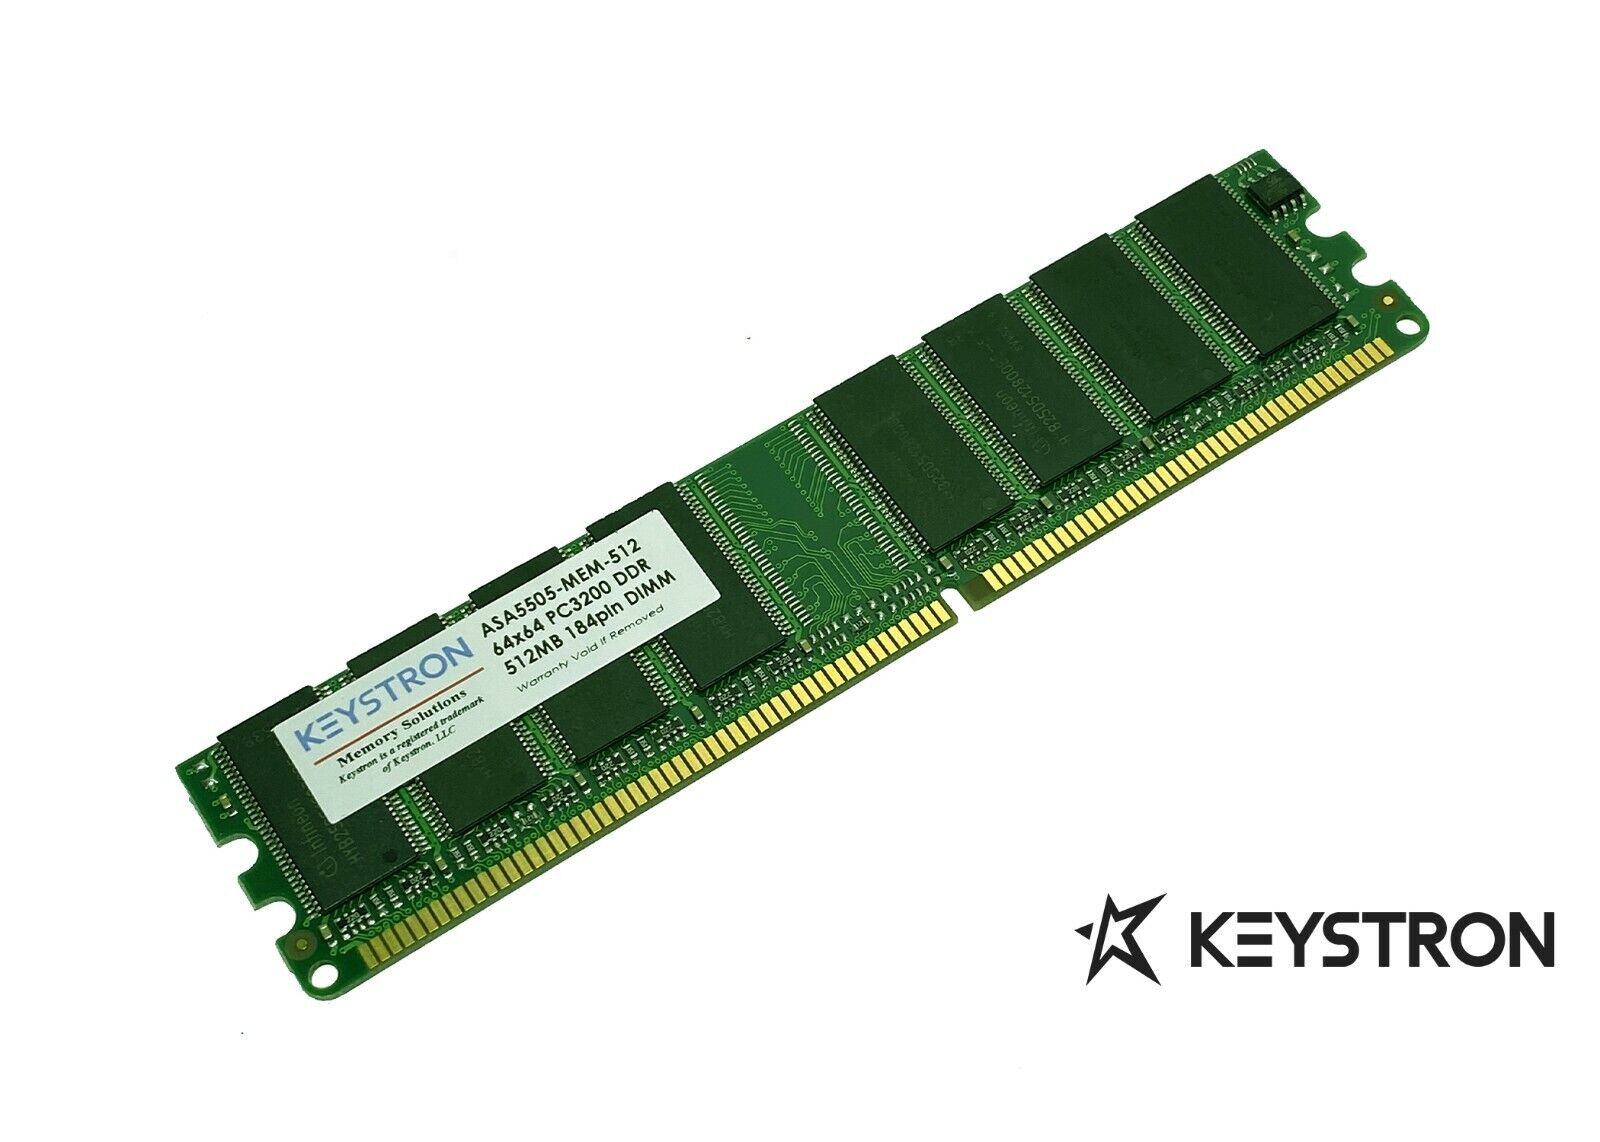 ASA5505-MEM-512 512D 512MB CISCO Compatible Dram Memory Upgrade for ASA 5505